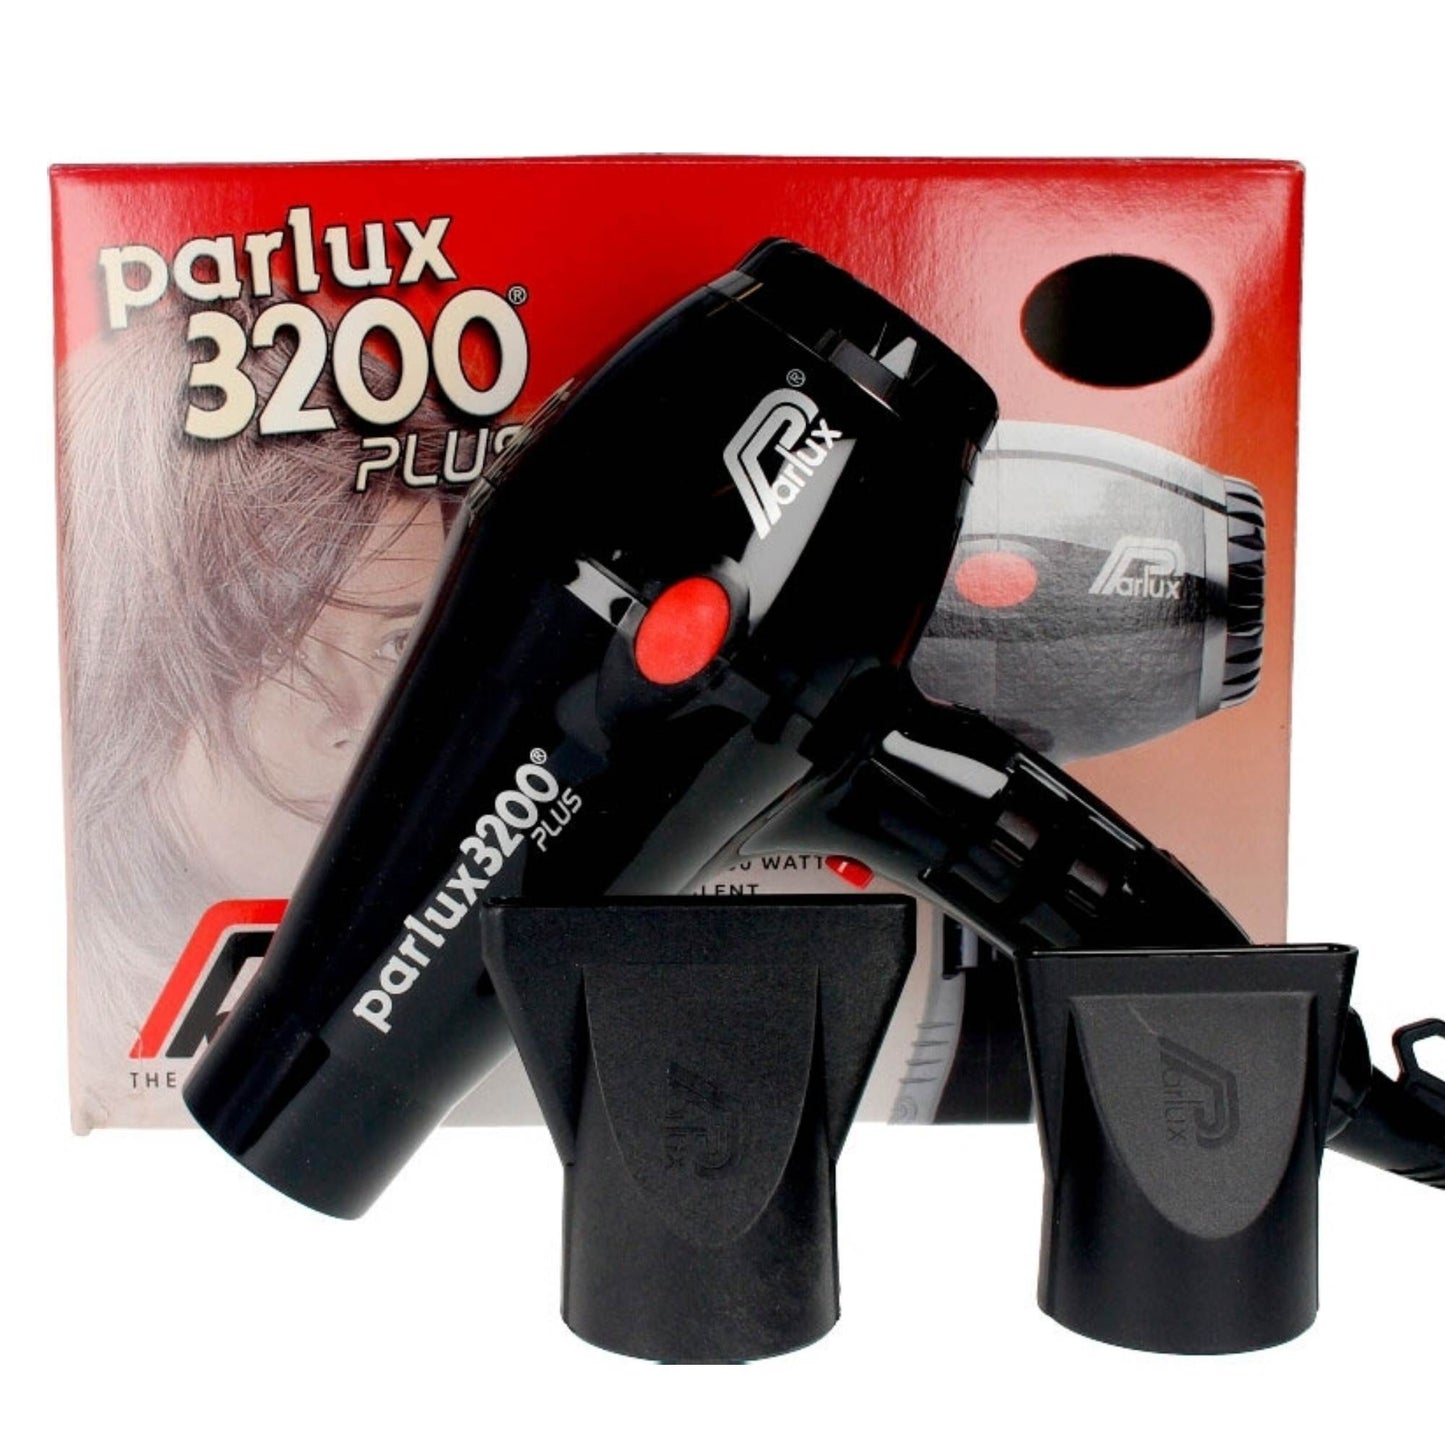 Parlux 3200 Black 1900W